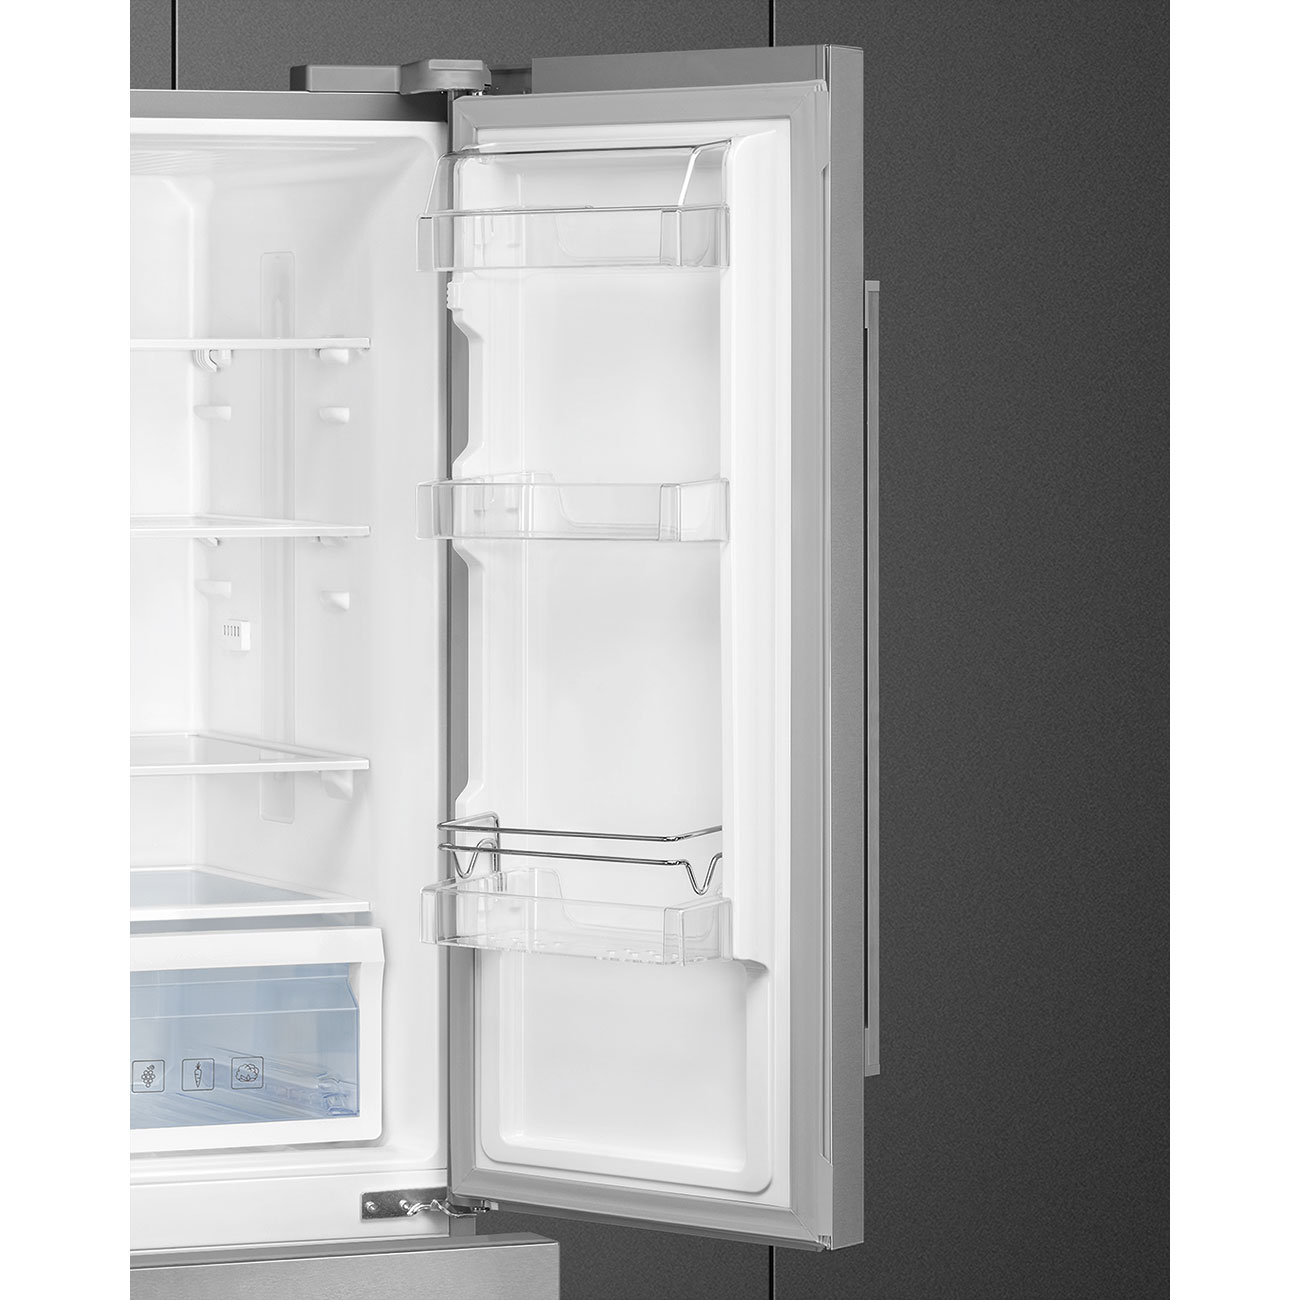 2 Doors & 2 Drawers Free standing refrigerator - Smeg_9